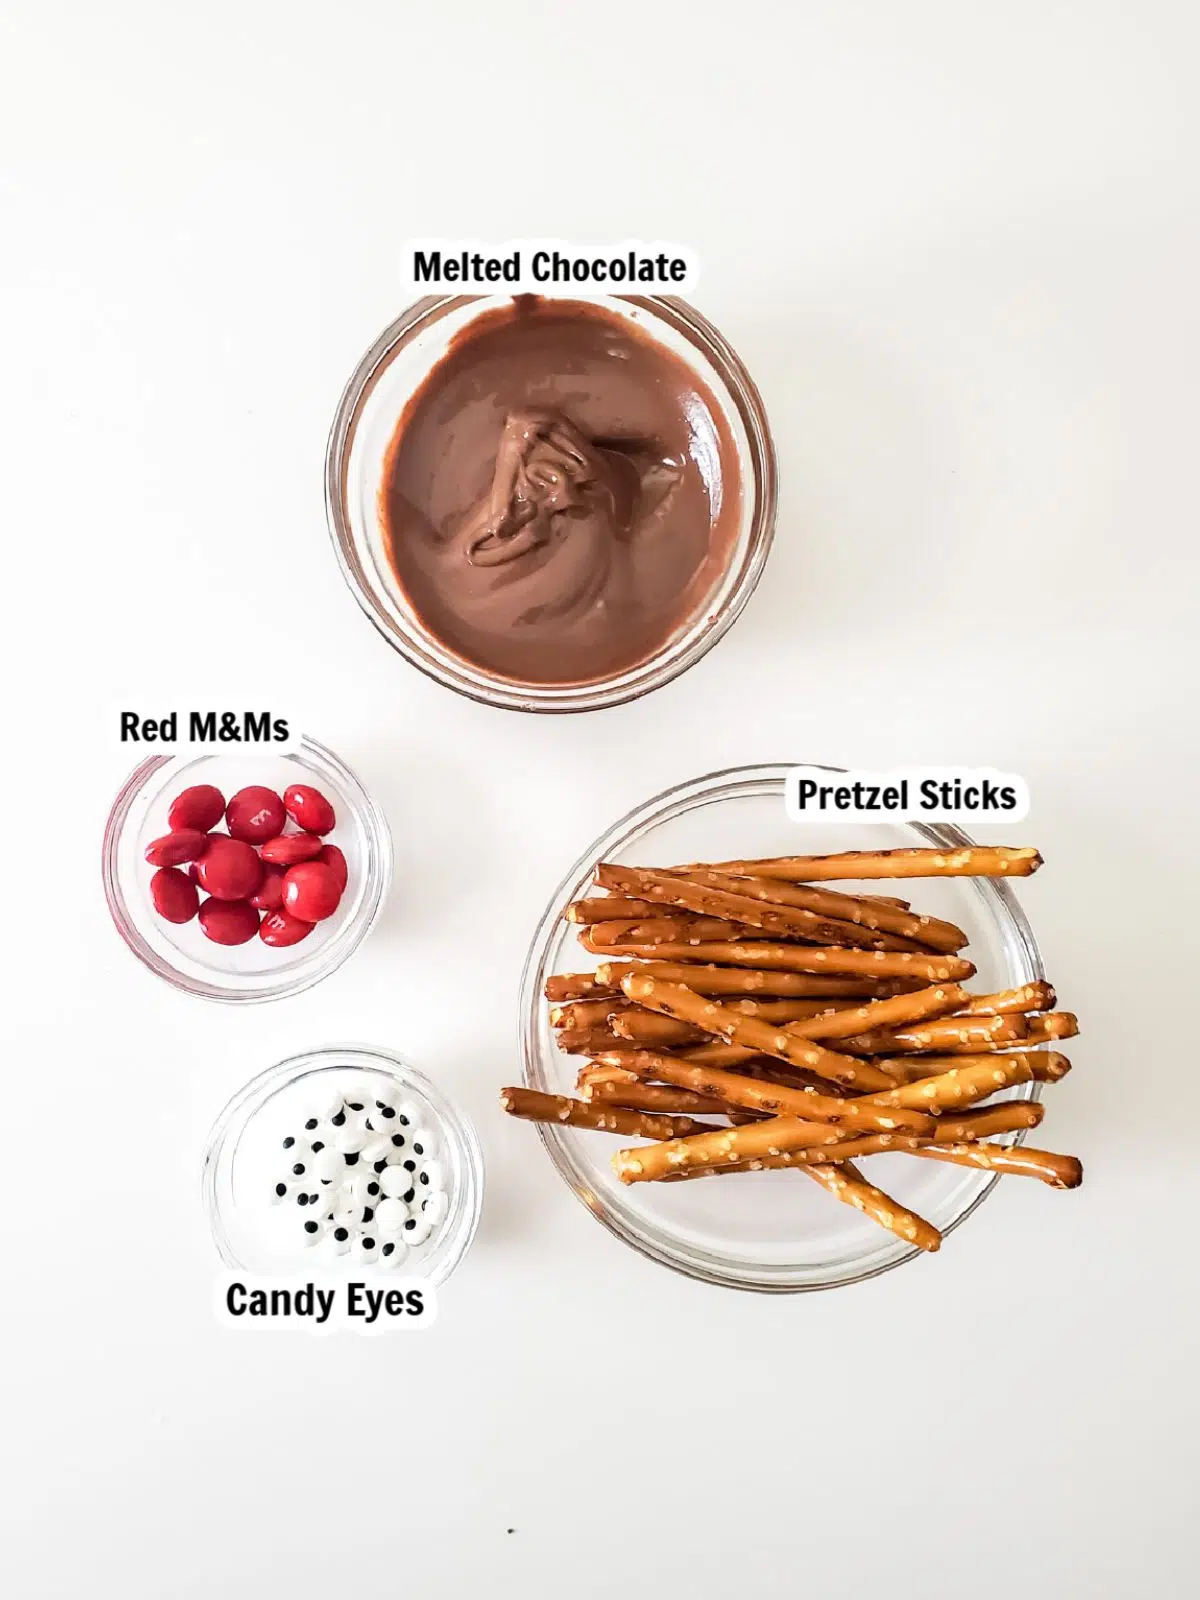 Ingredients - pretzel sticks, candy eyes, melted chocolate.